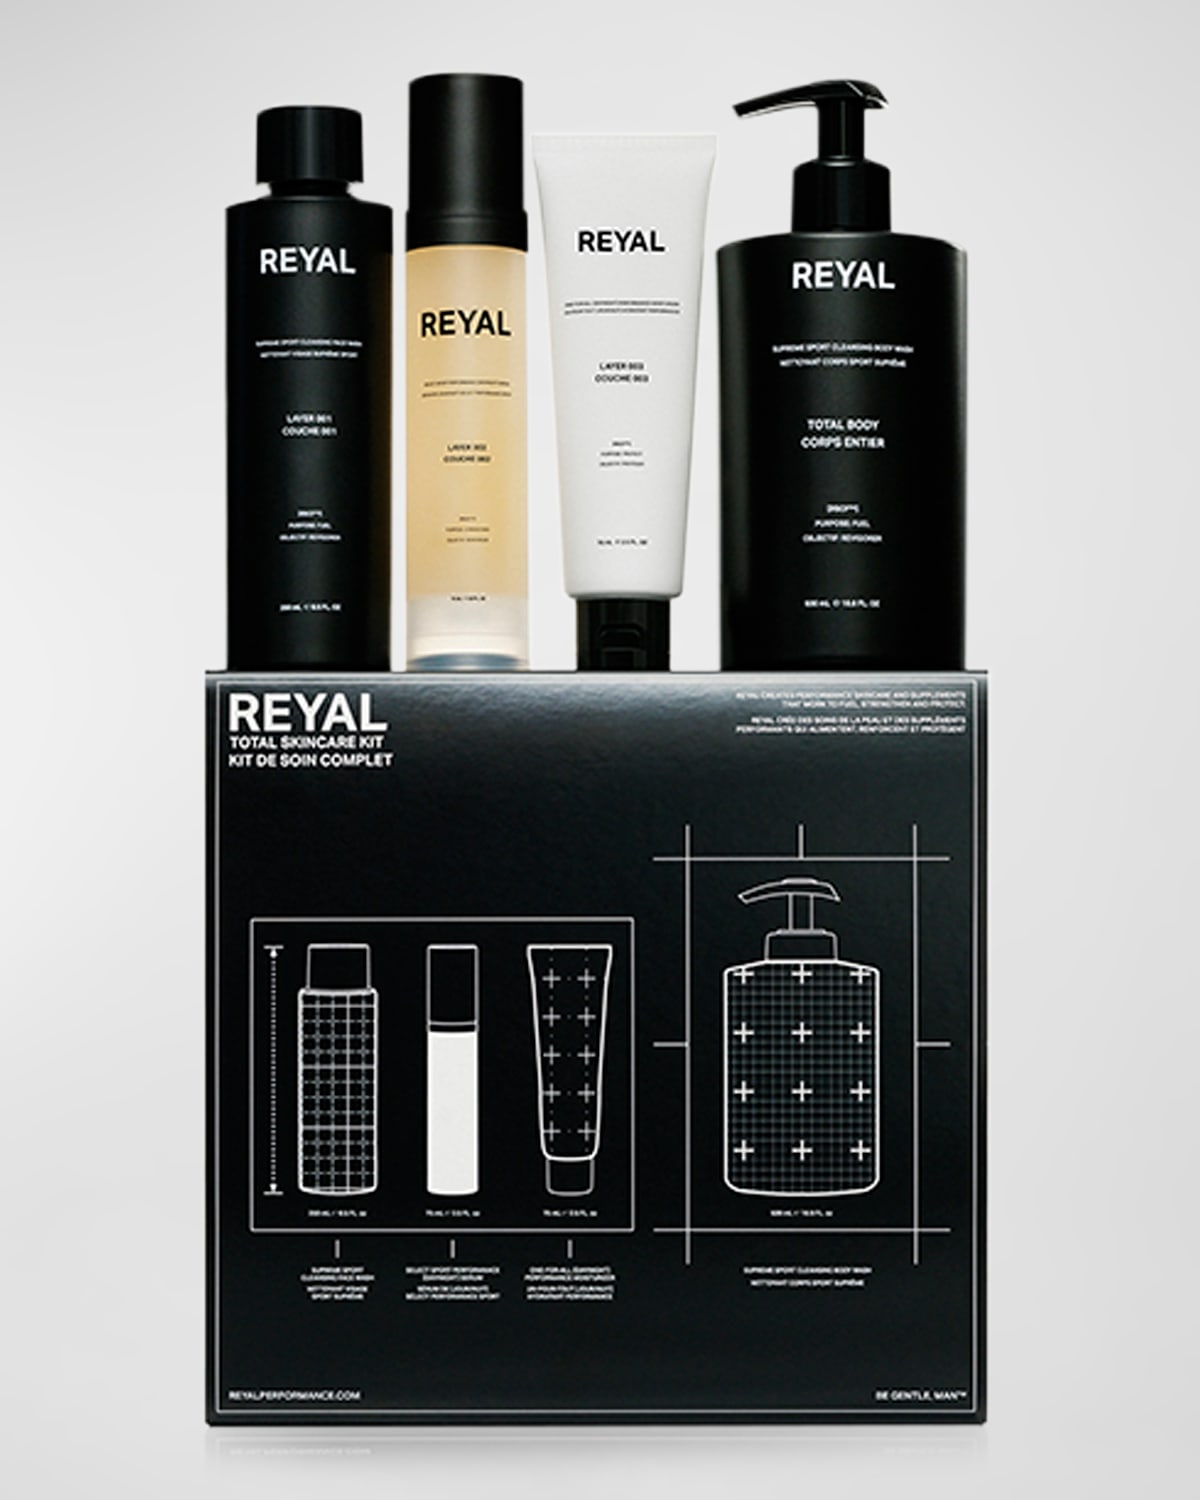 REYAL Men's Total Skincare Kit